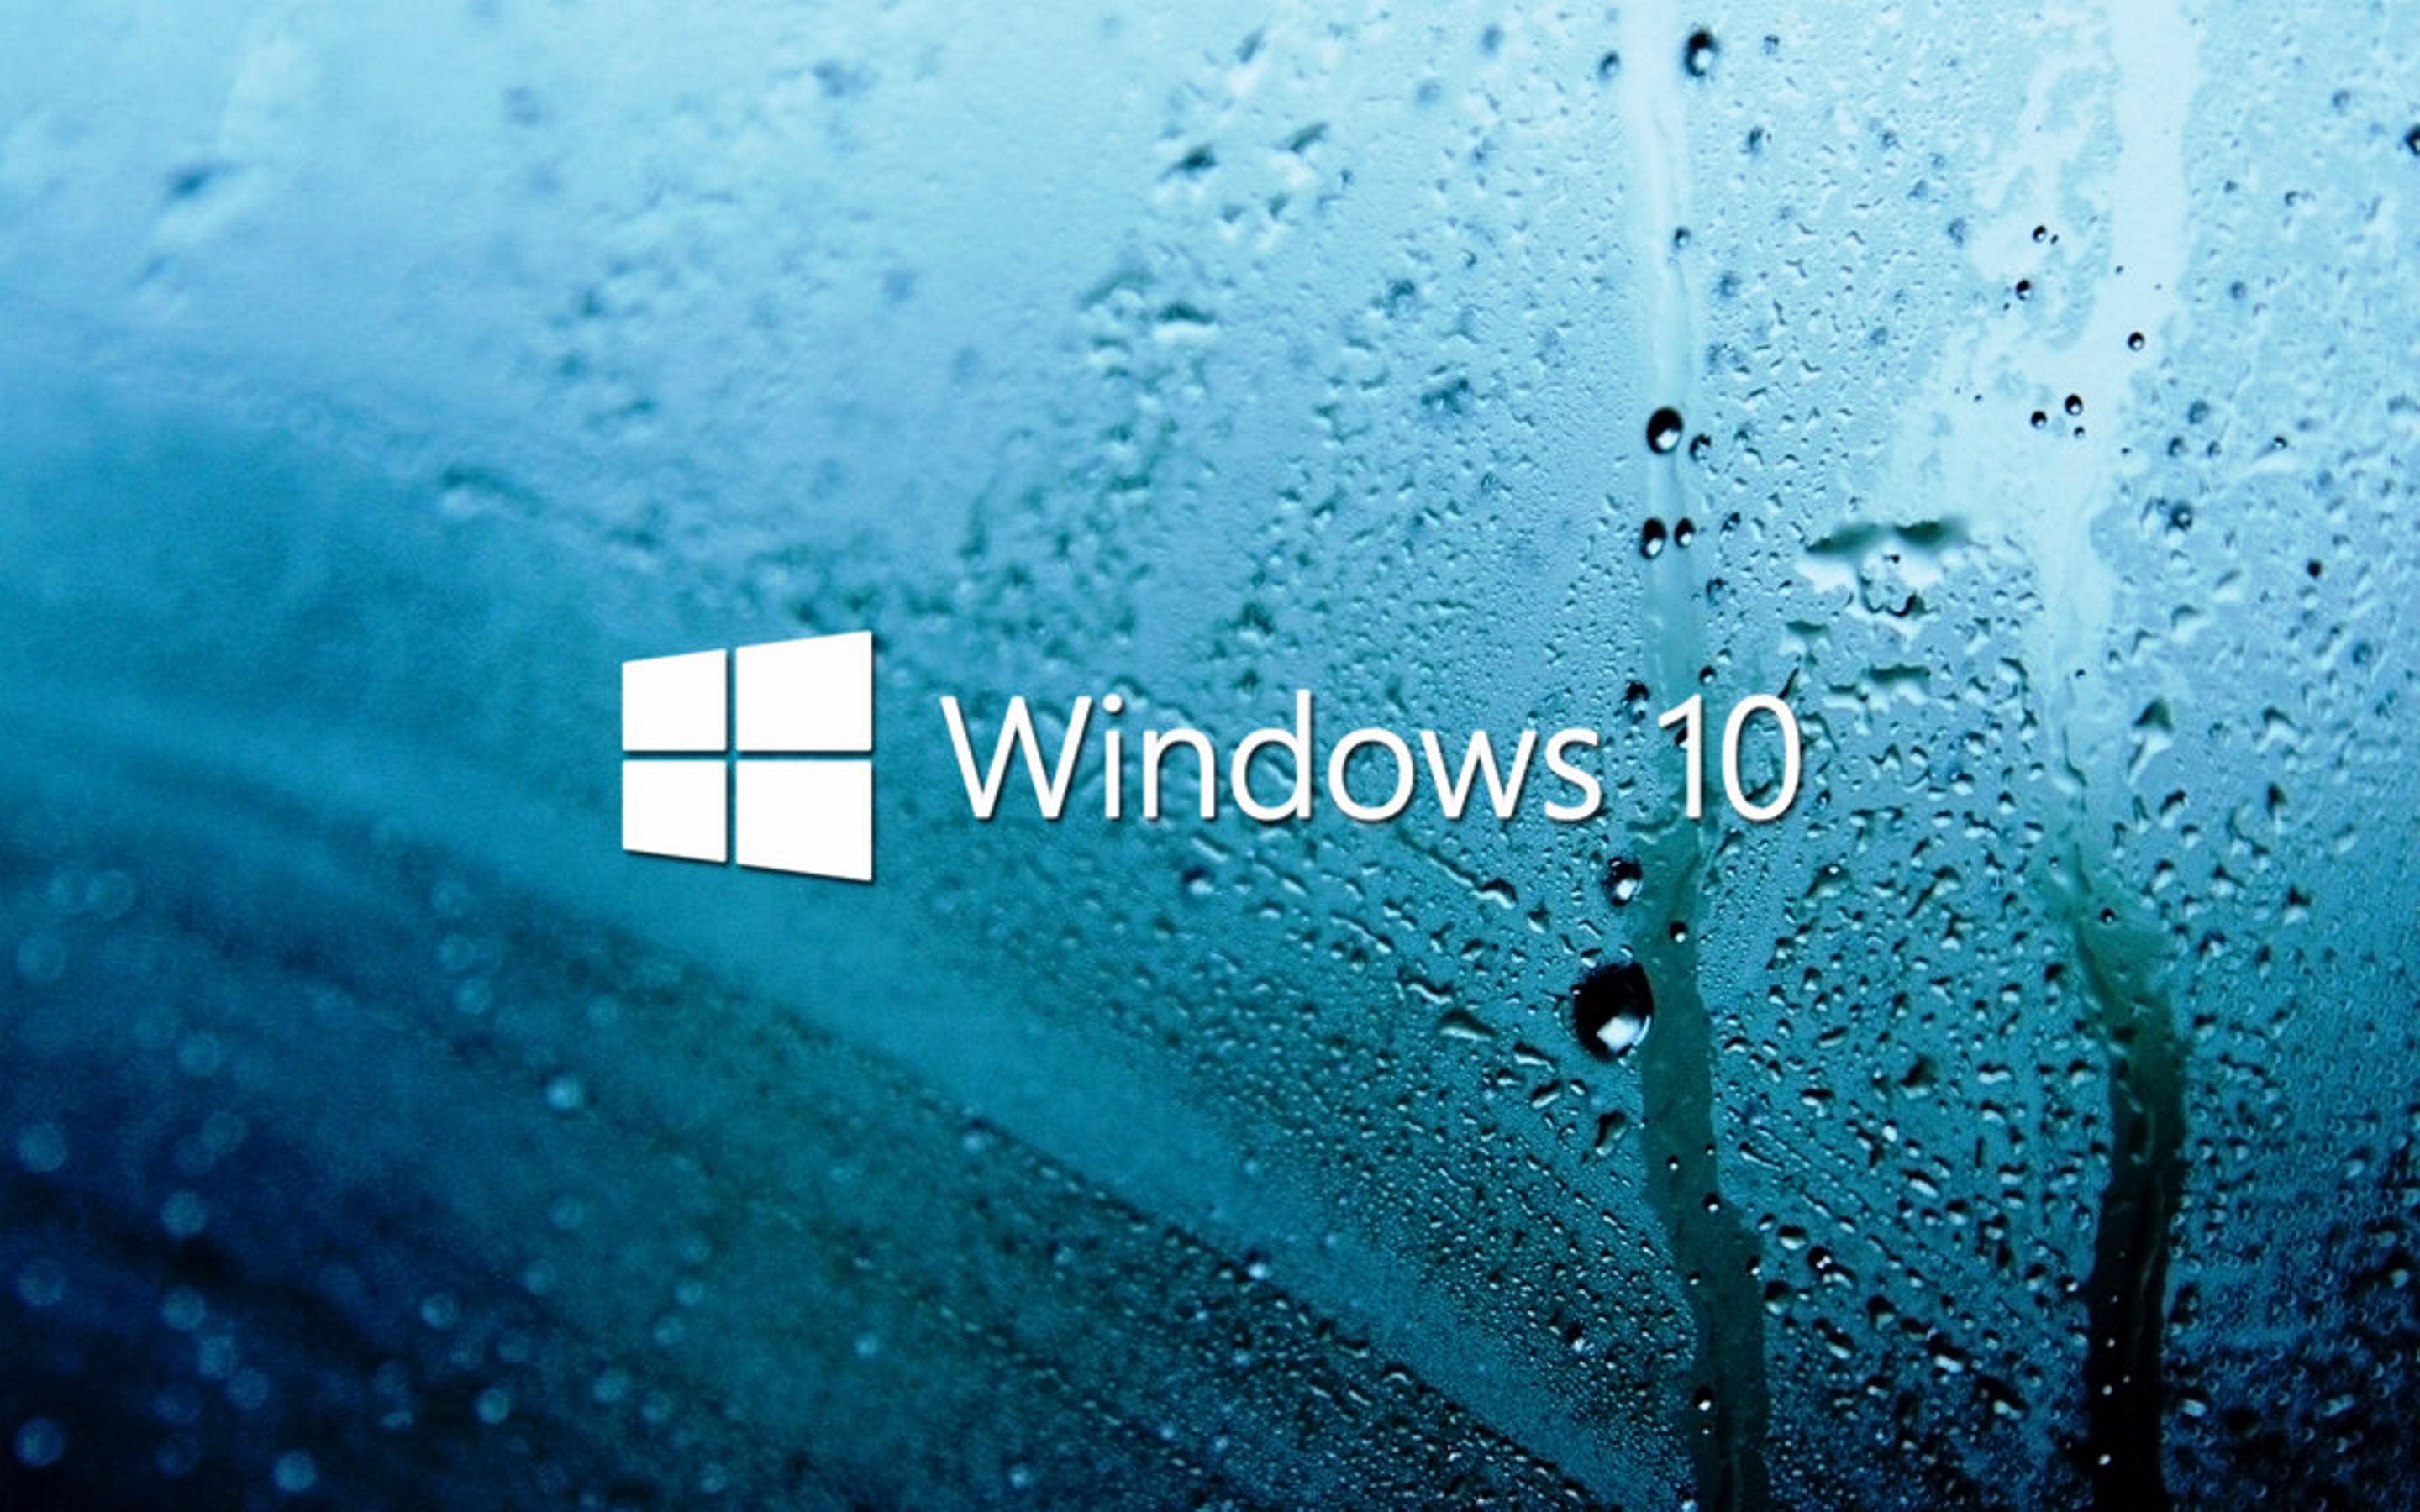 Windows 10 Computer HD Wallpaper. I HD Image